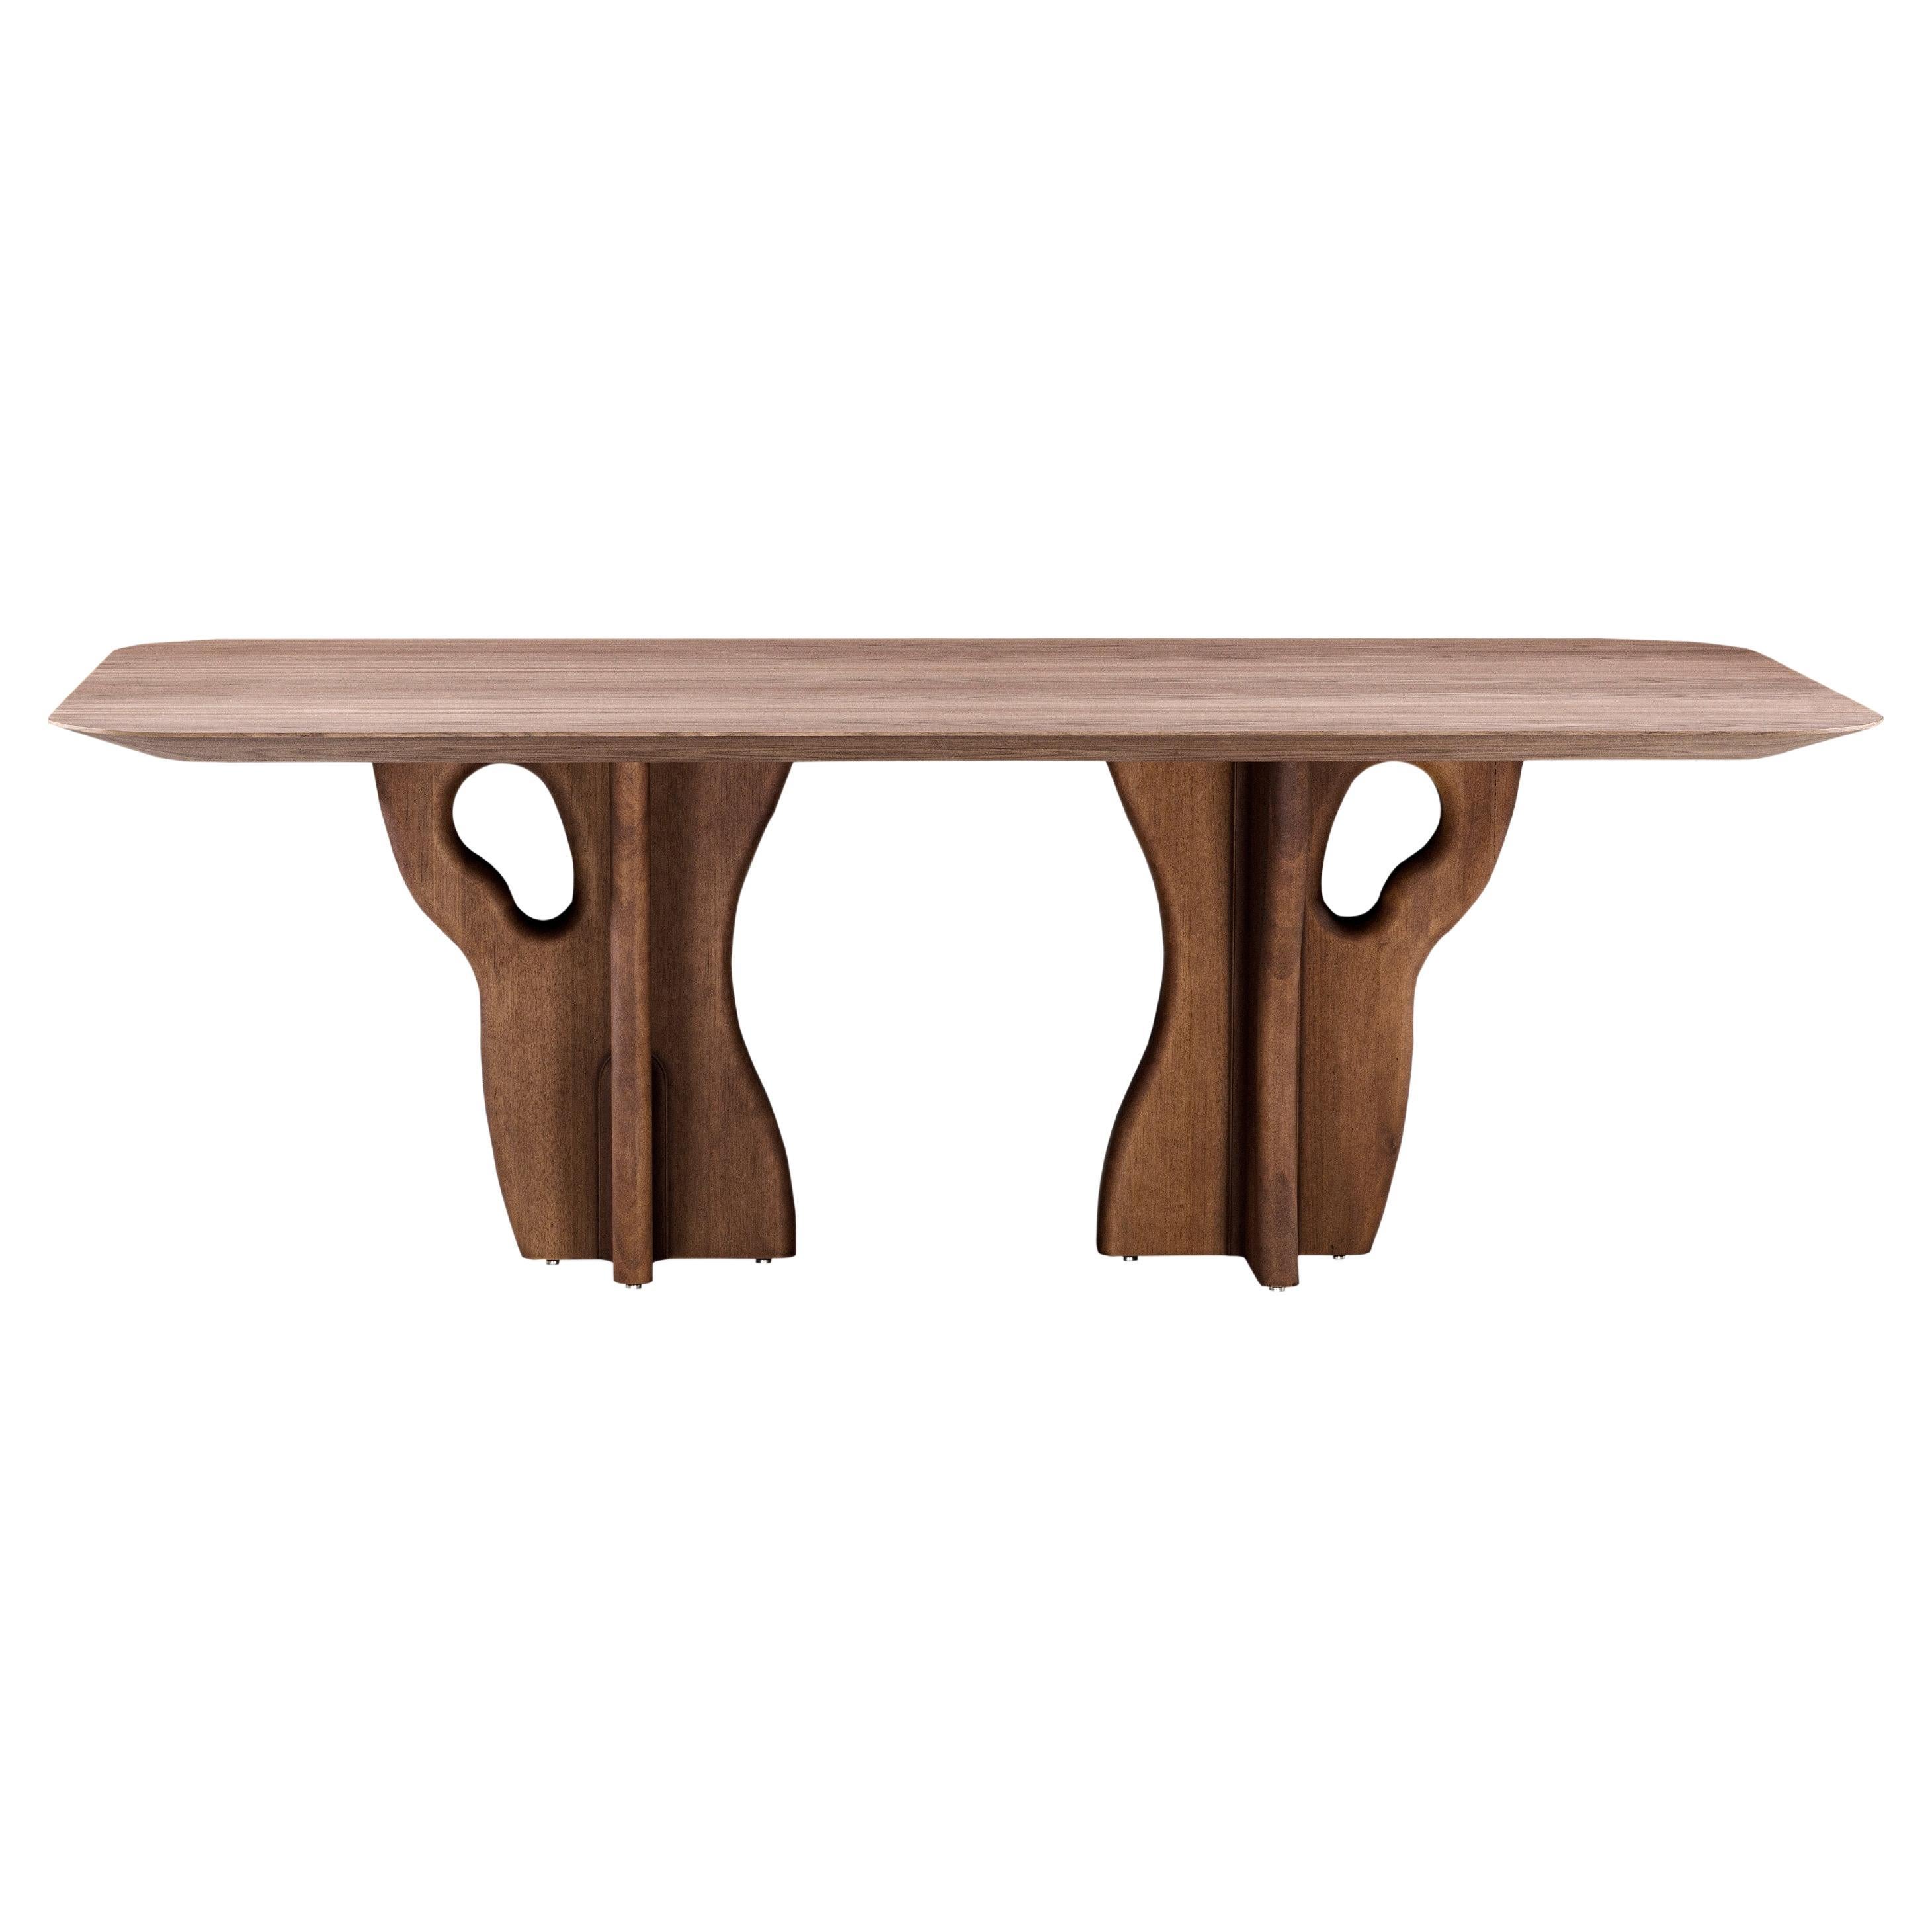 Suma Dining Table with Walnut Veneered Top and Organic Solid Wood Legs 86''